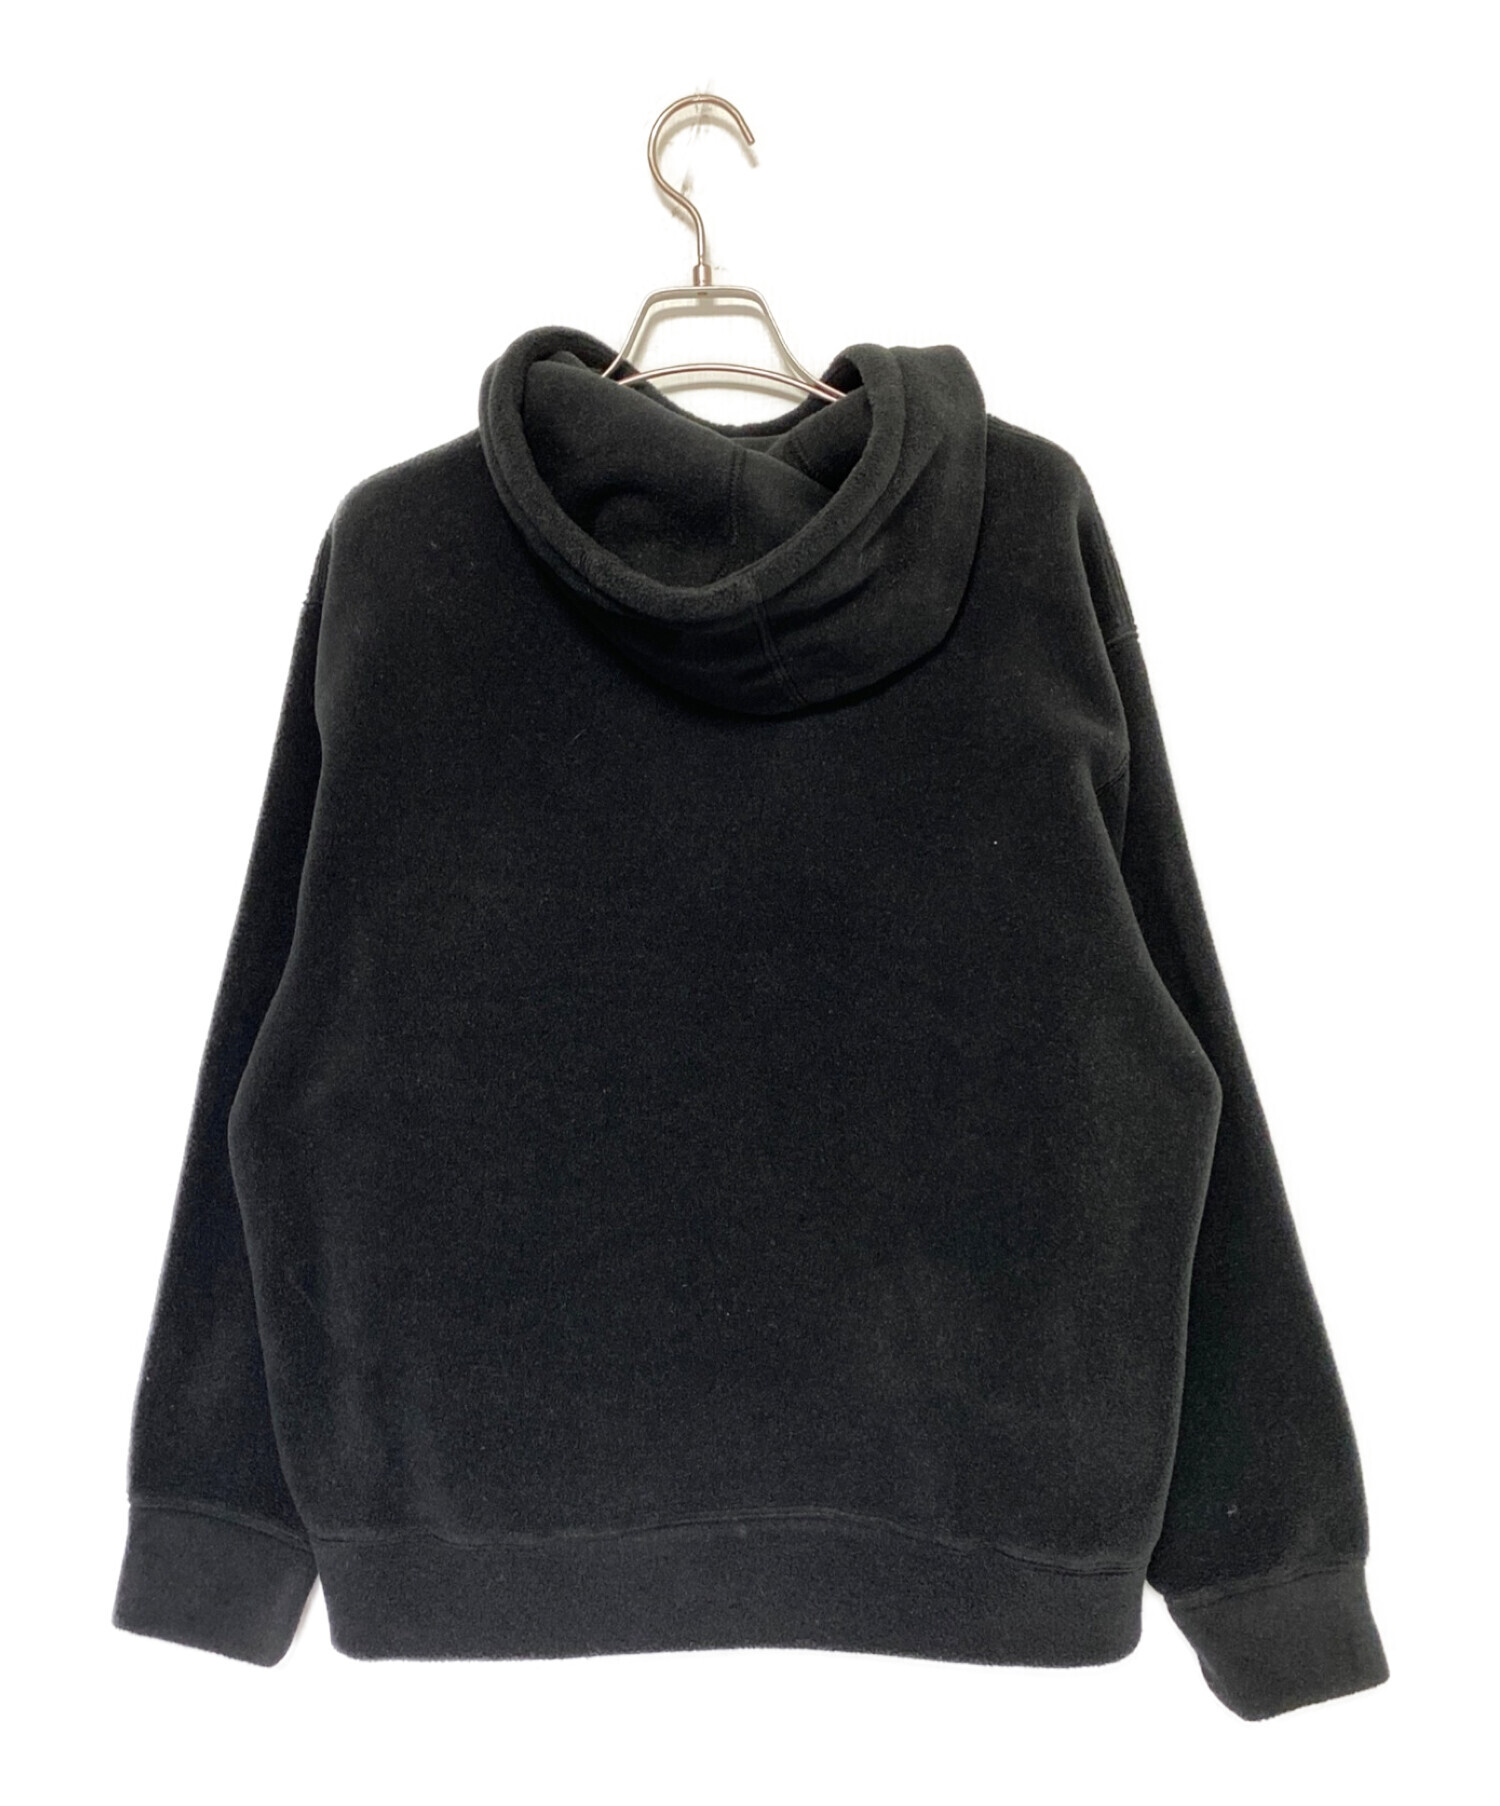 Supreme polartec®︎Hooded Sweatshirt サイズS